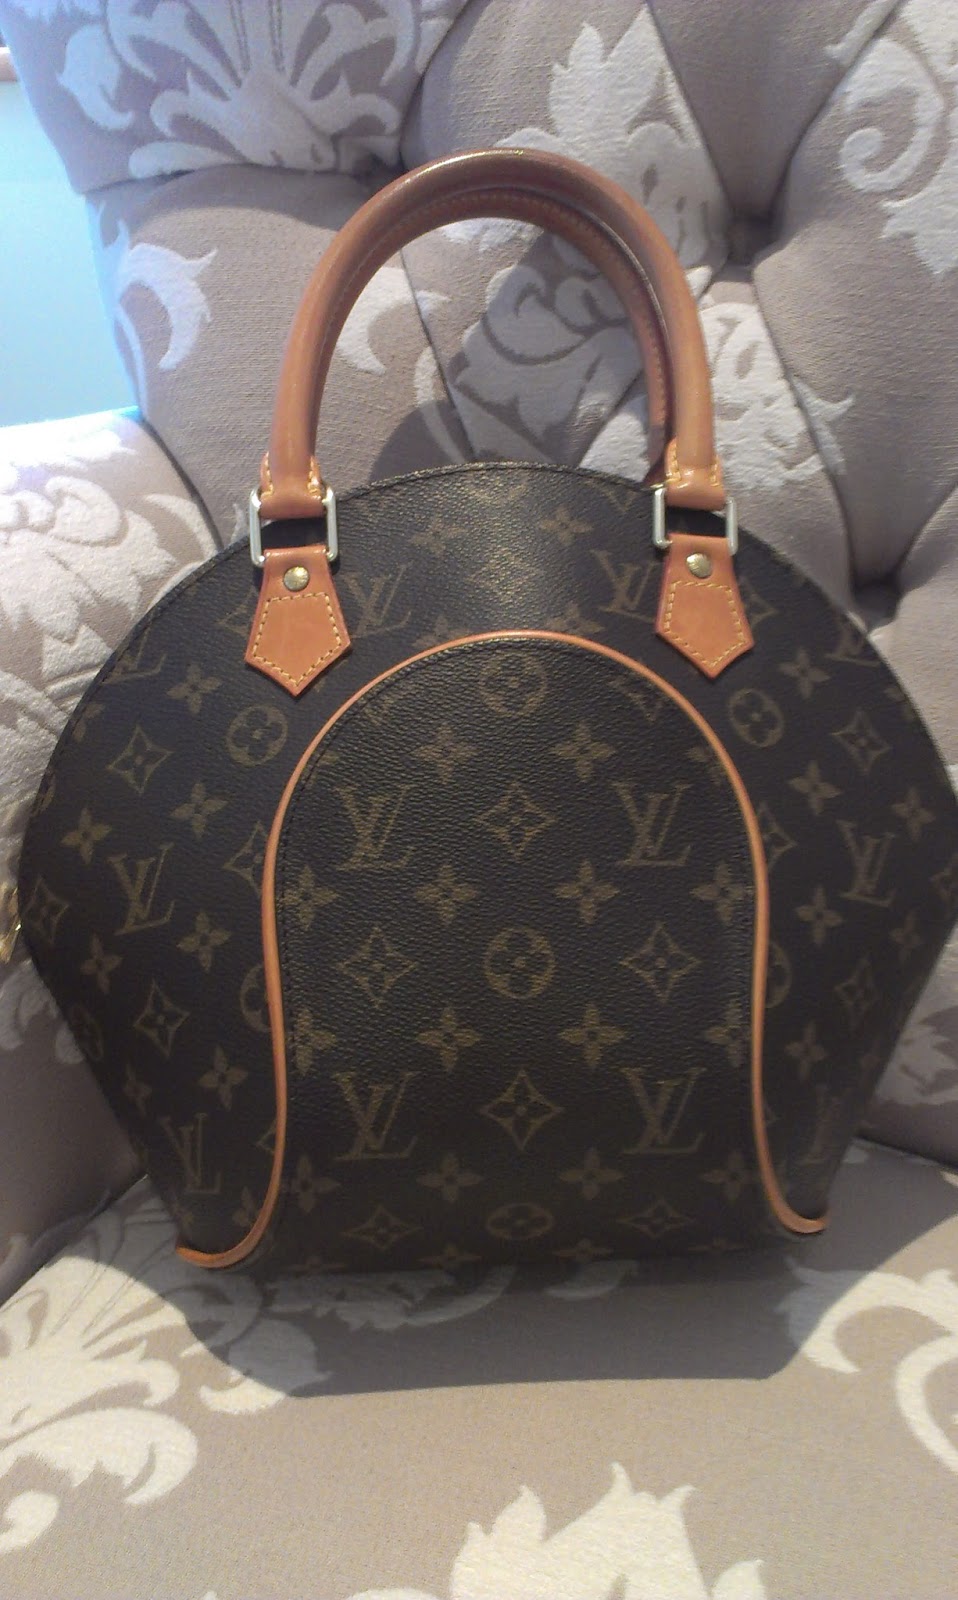 How to spot a fake Louis Vuitton handbag | High Street Couture